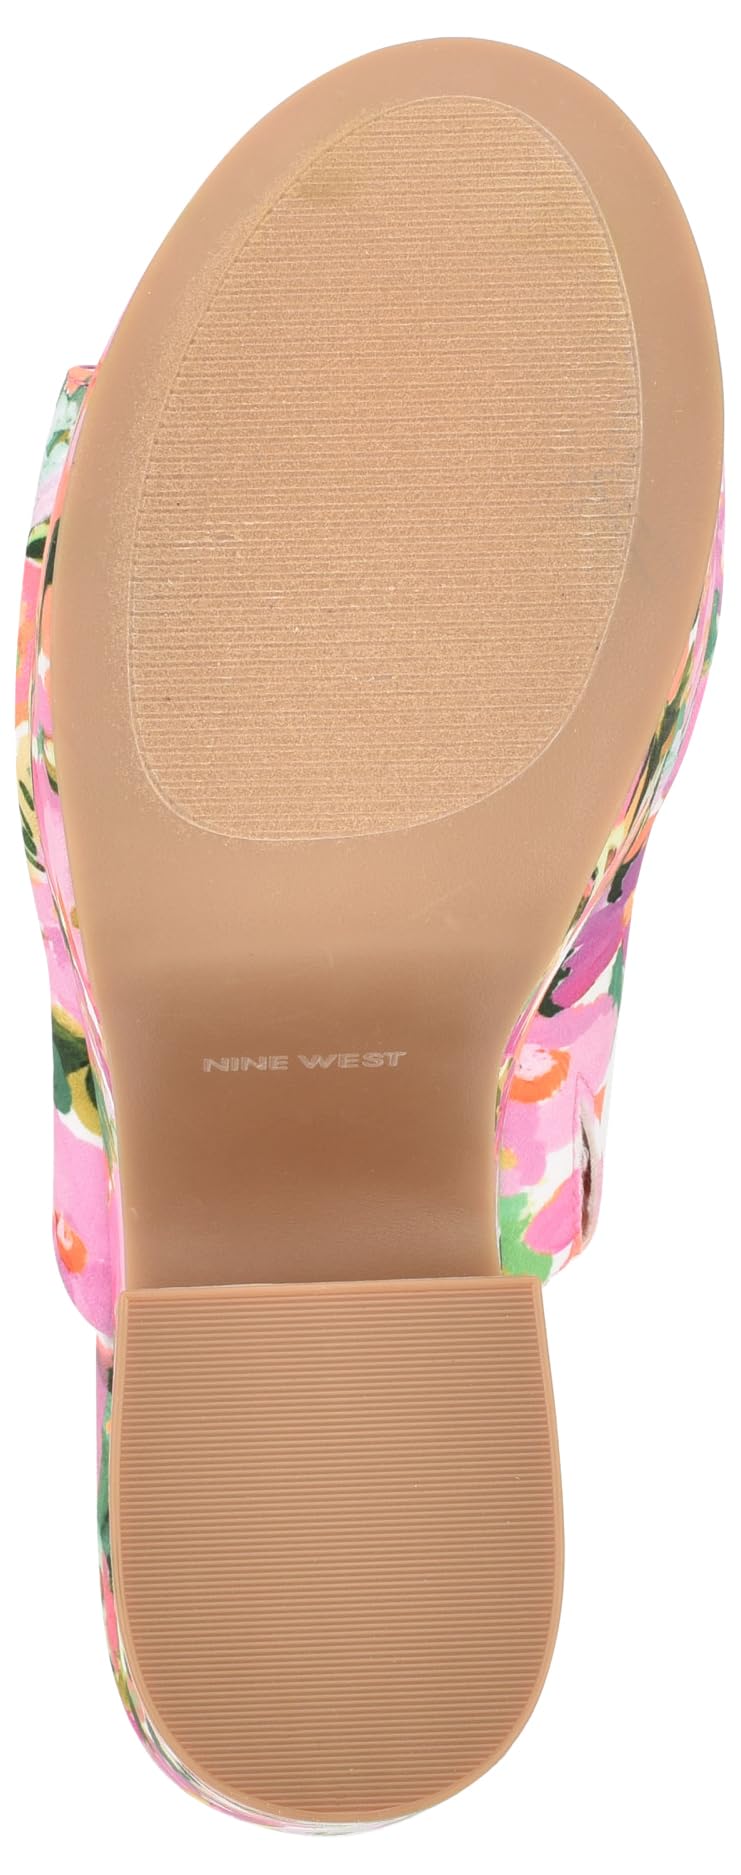 Nine West Women's Olley Wedge Sandal